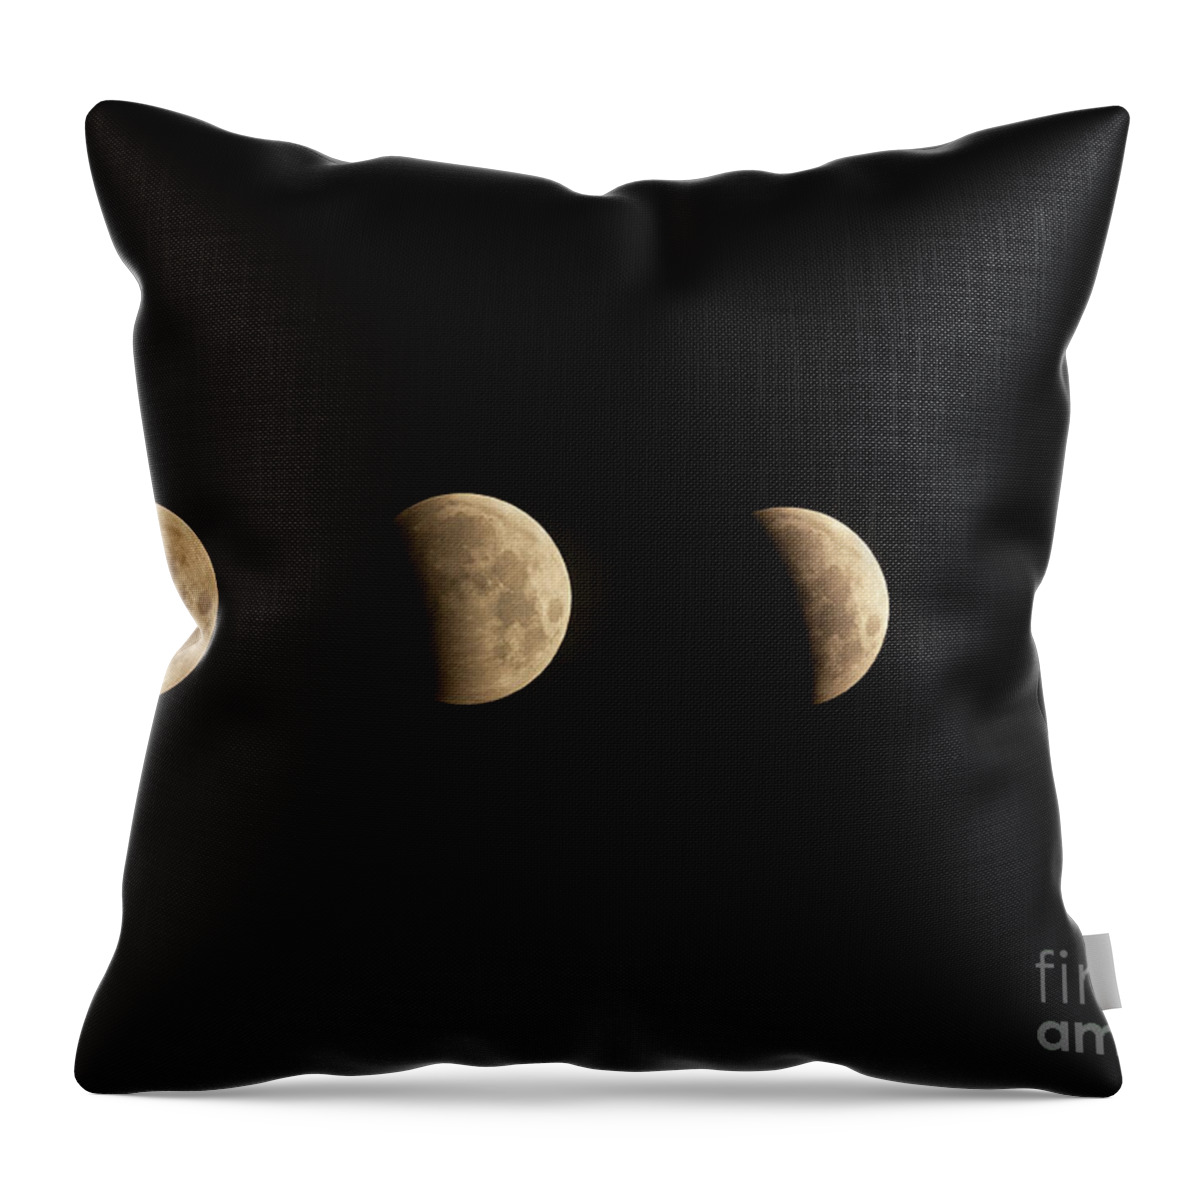 Lunar Eclipse Throw Pillow featuring the photograph Lunar Eclipse Sequence by Maresa Pryor-Luzier